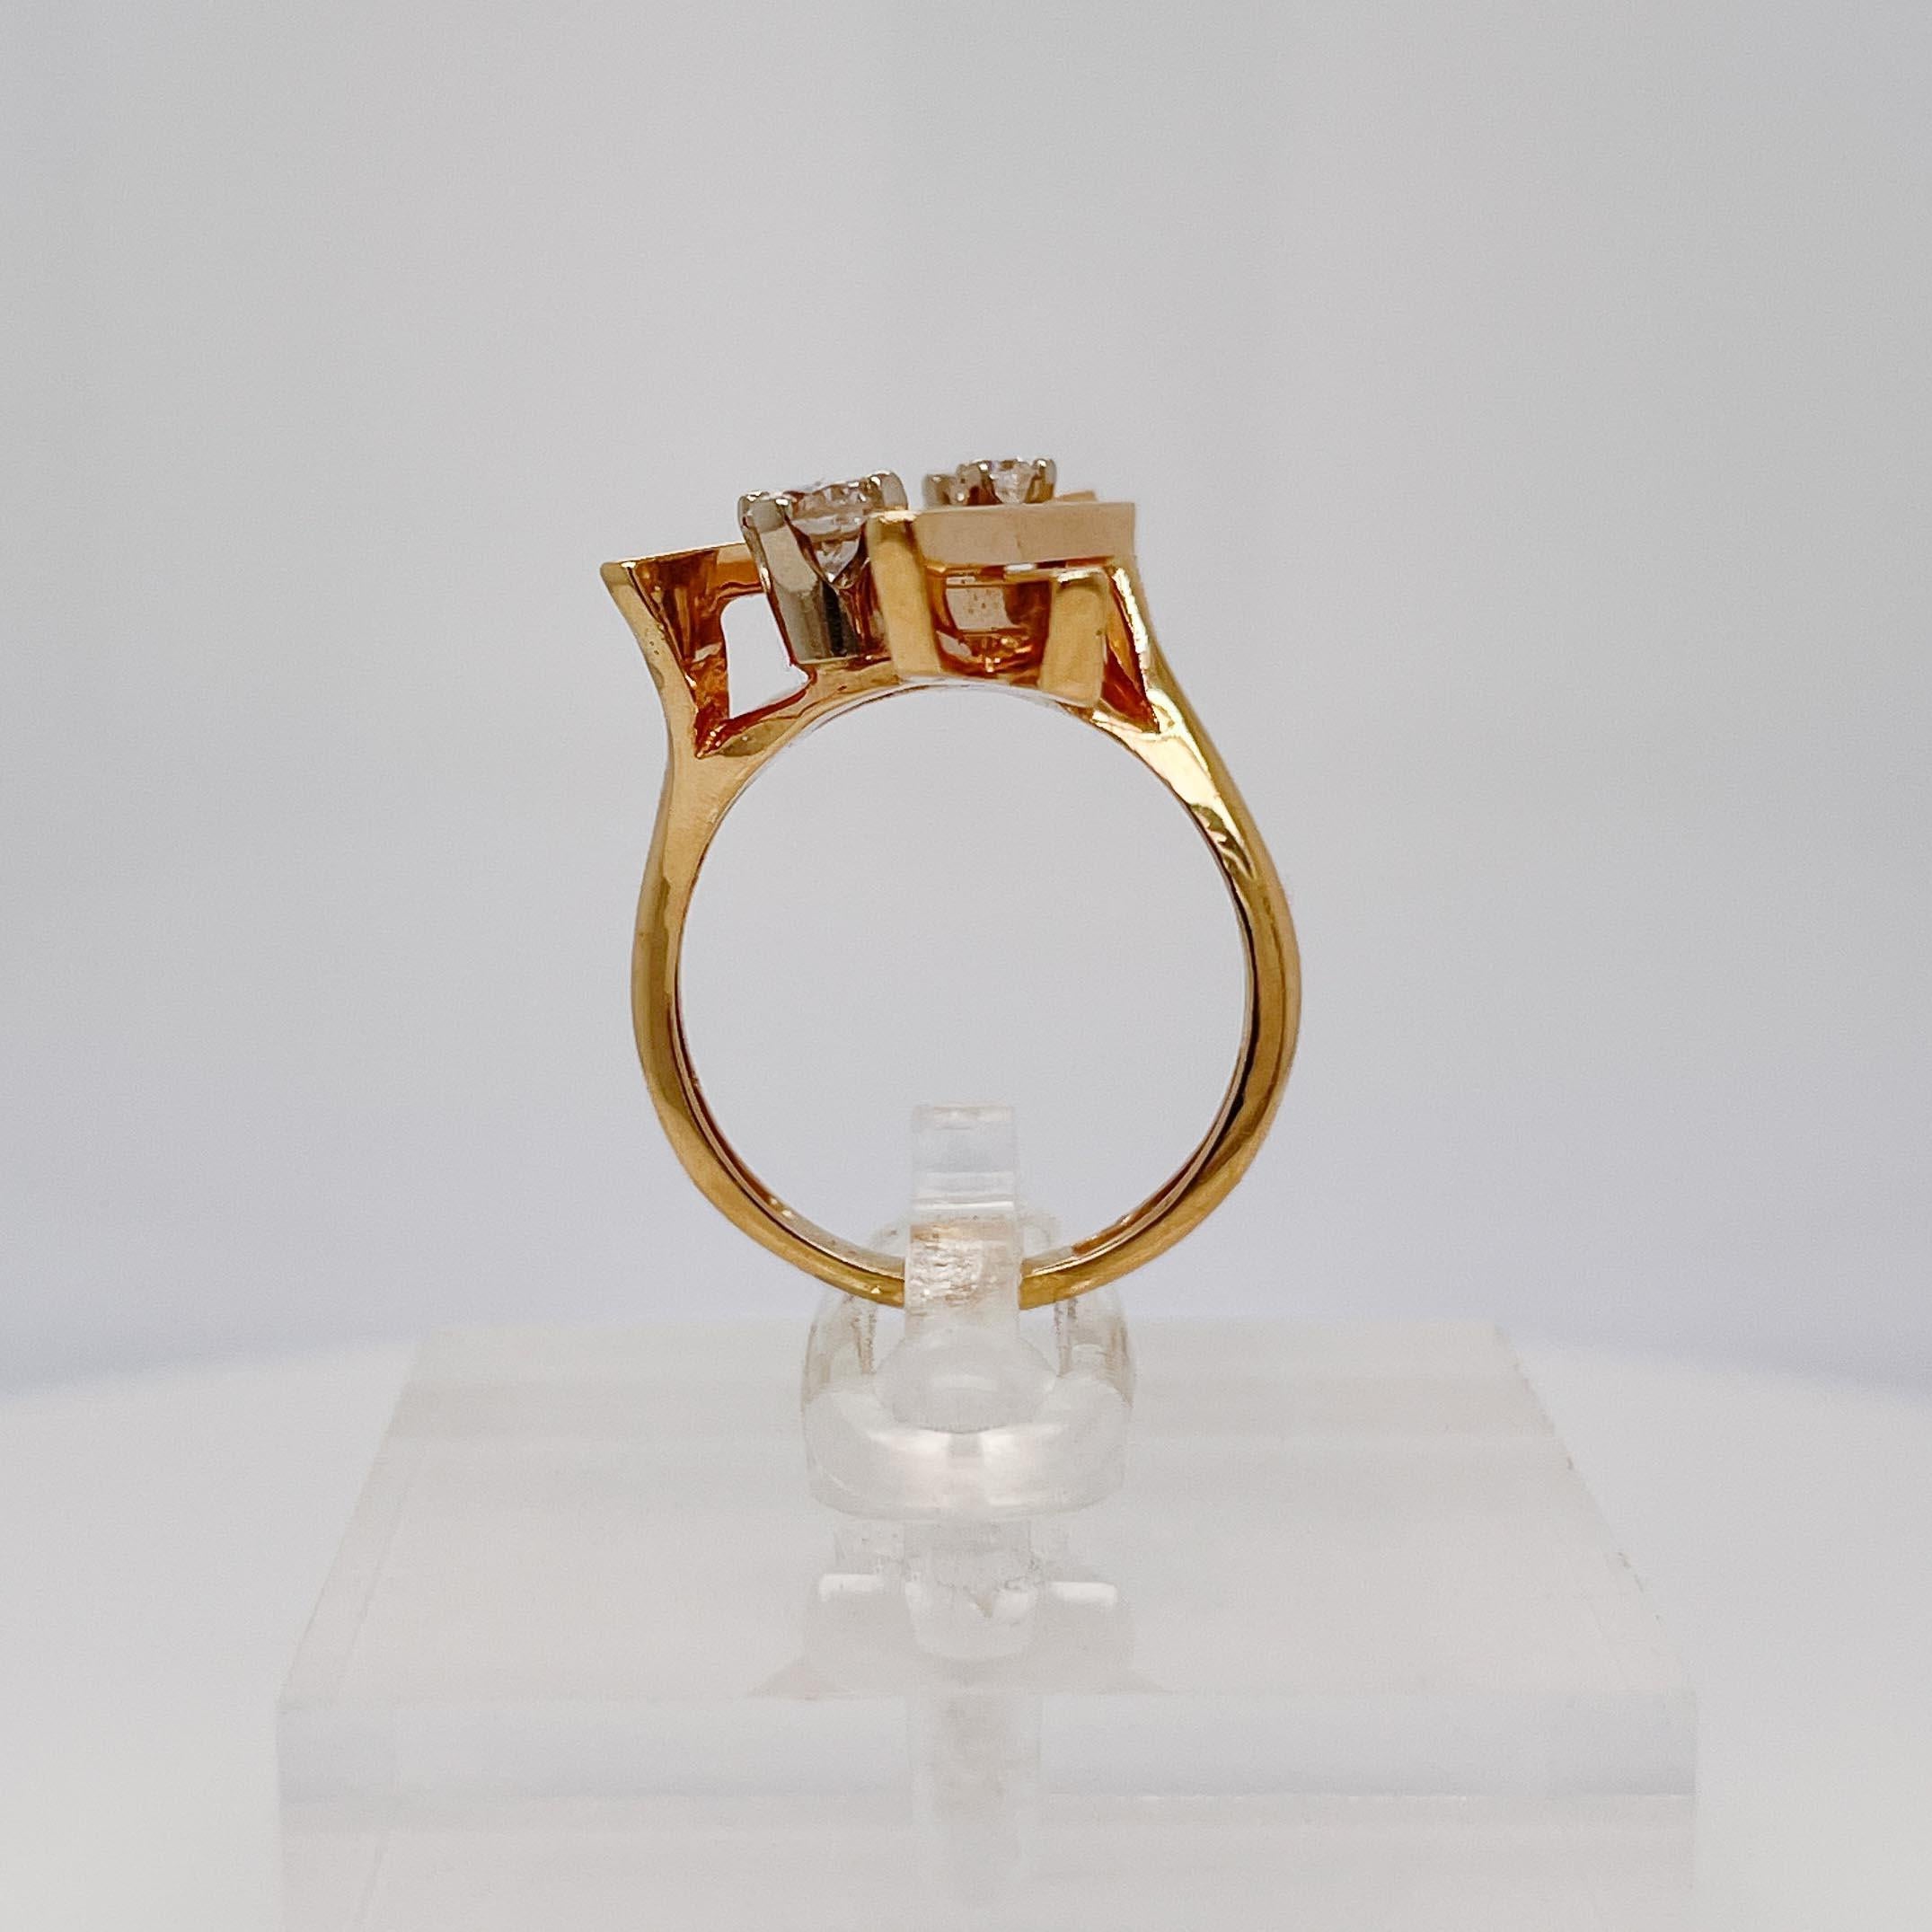 Signed Hammerman Bros Modernist 14 Karat Gold & Diamond Cocktail Ring  For Sale 1